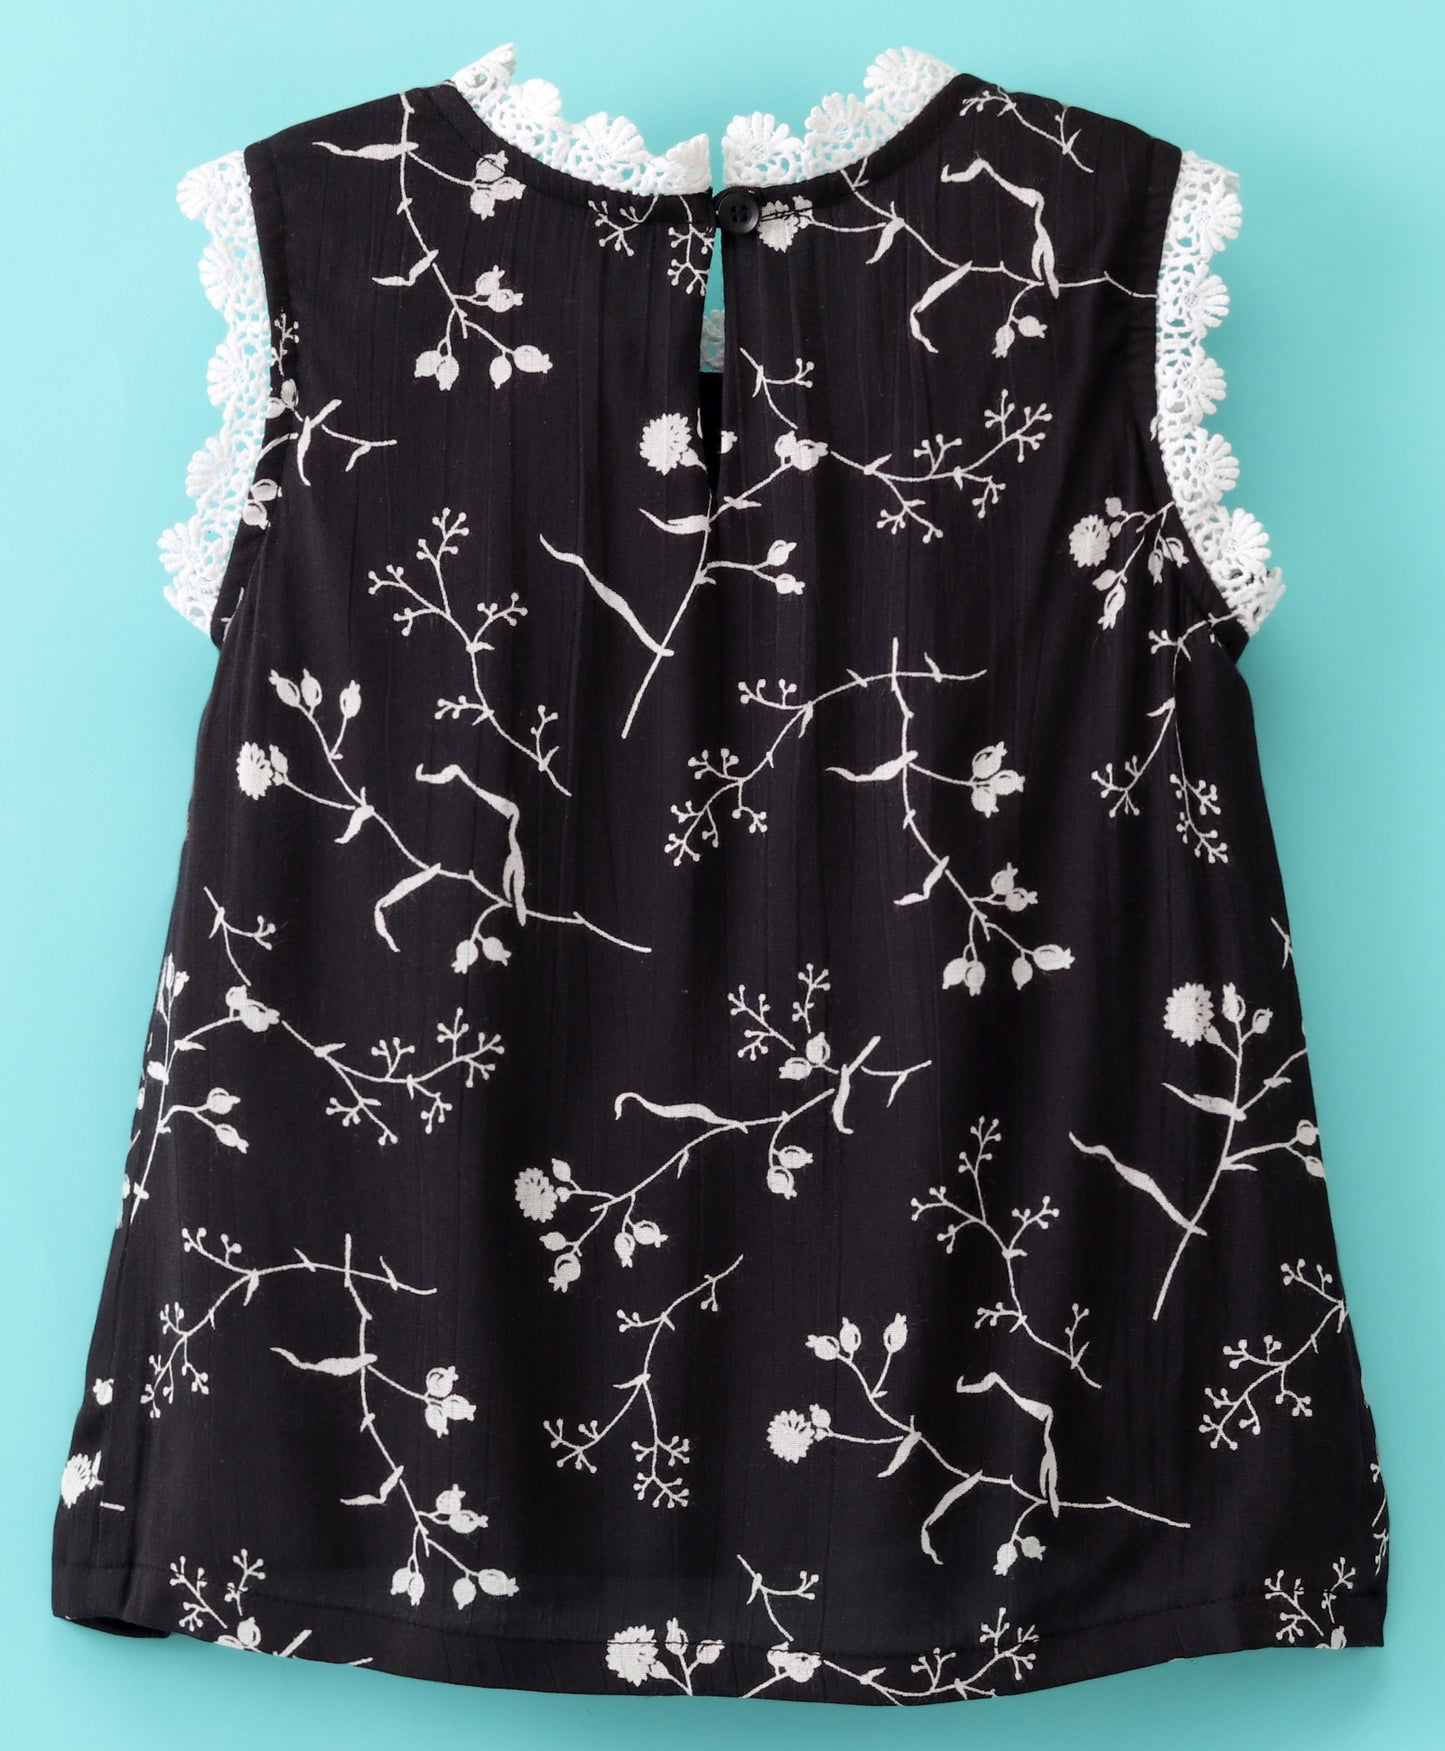 Sleeveless All Over Flower Stem Printed & Lace Embellished Top - Black